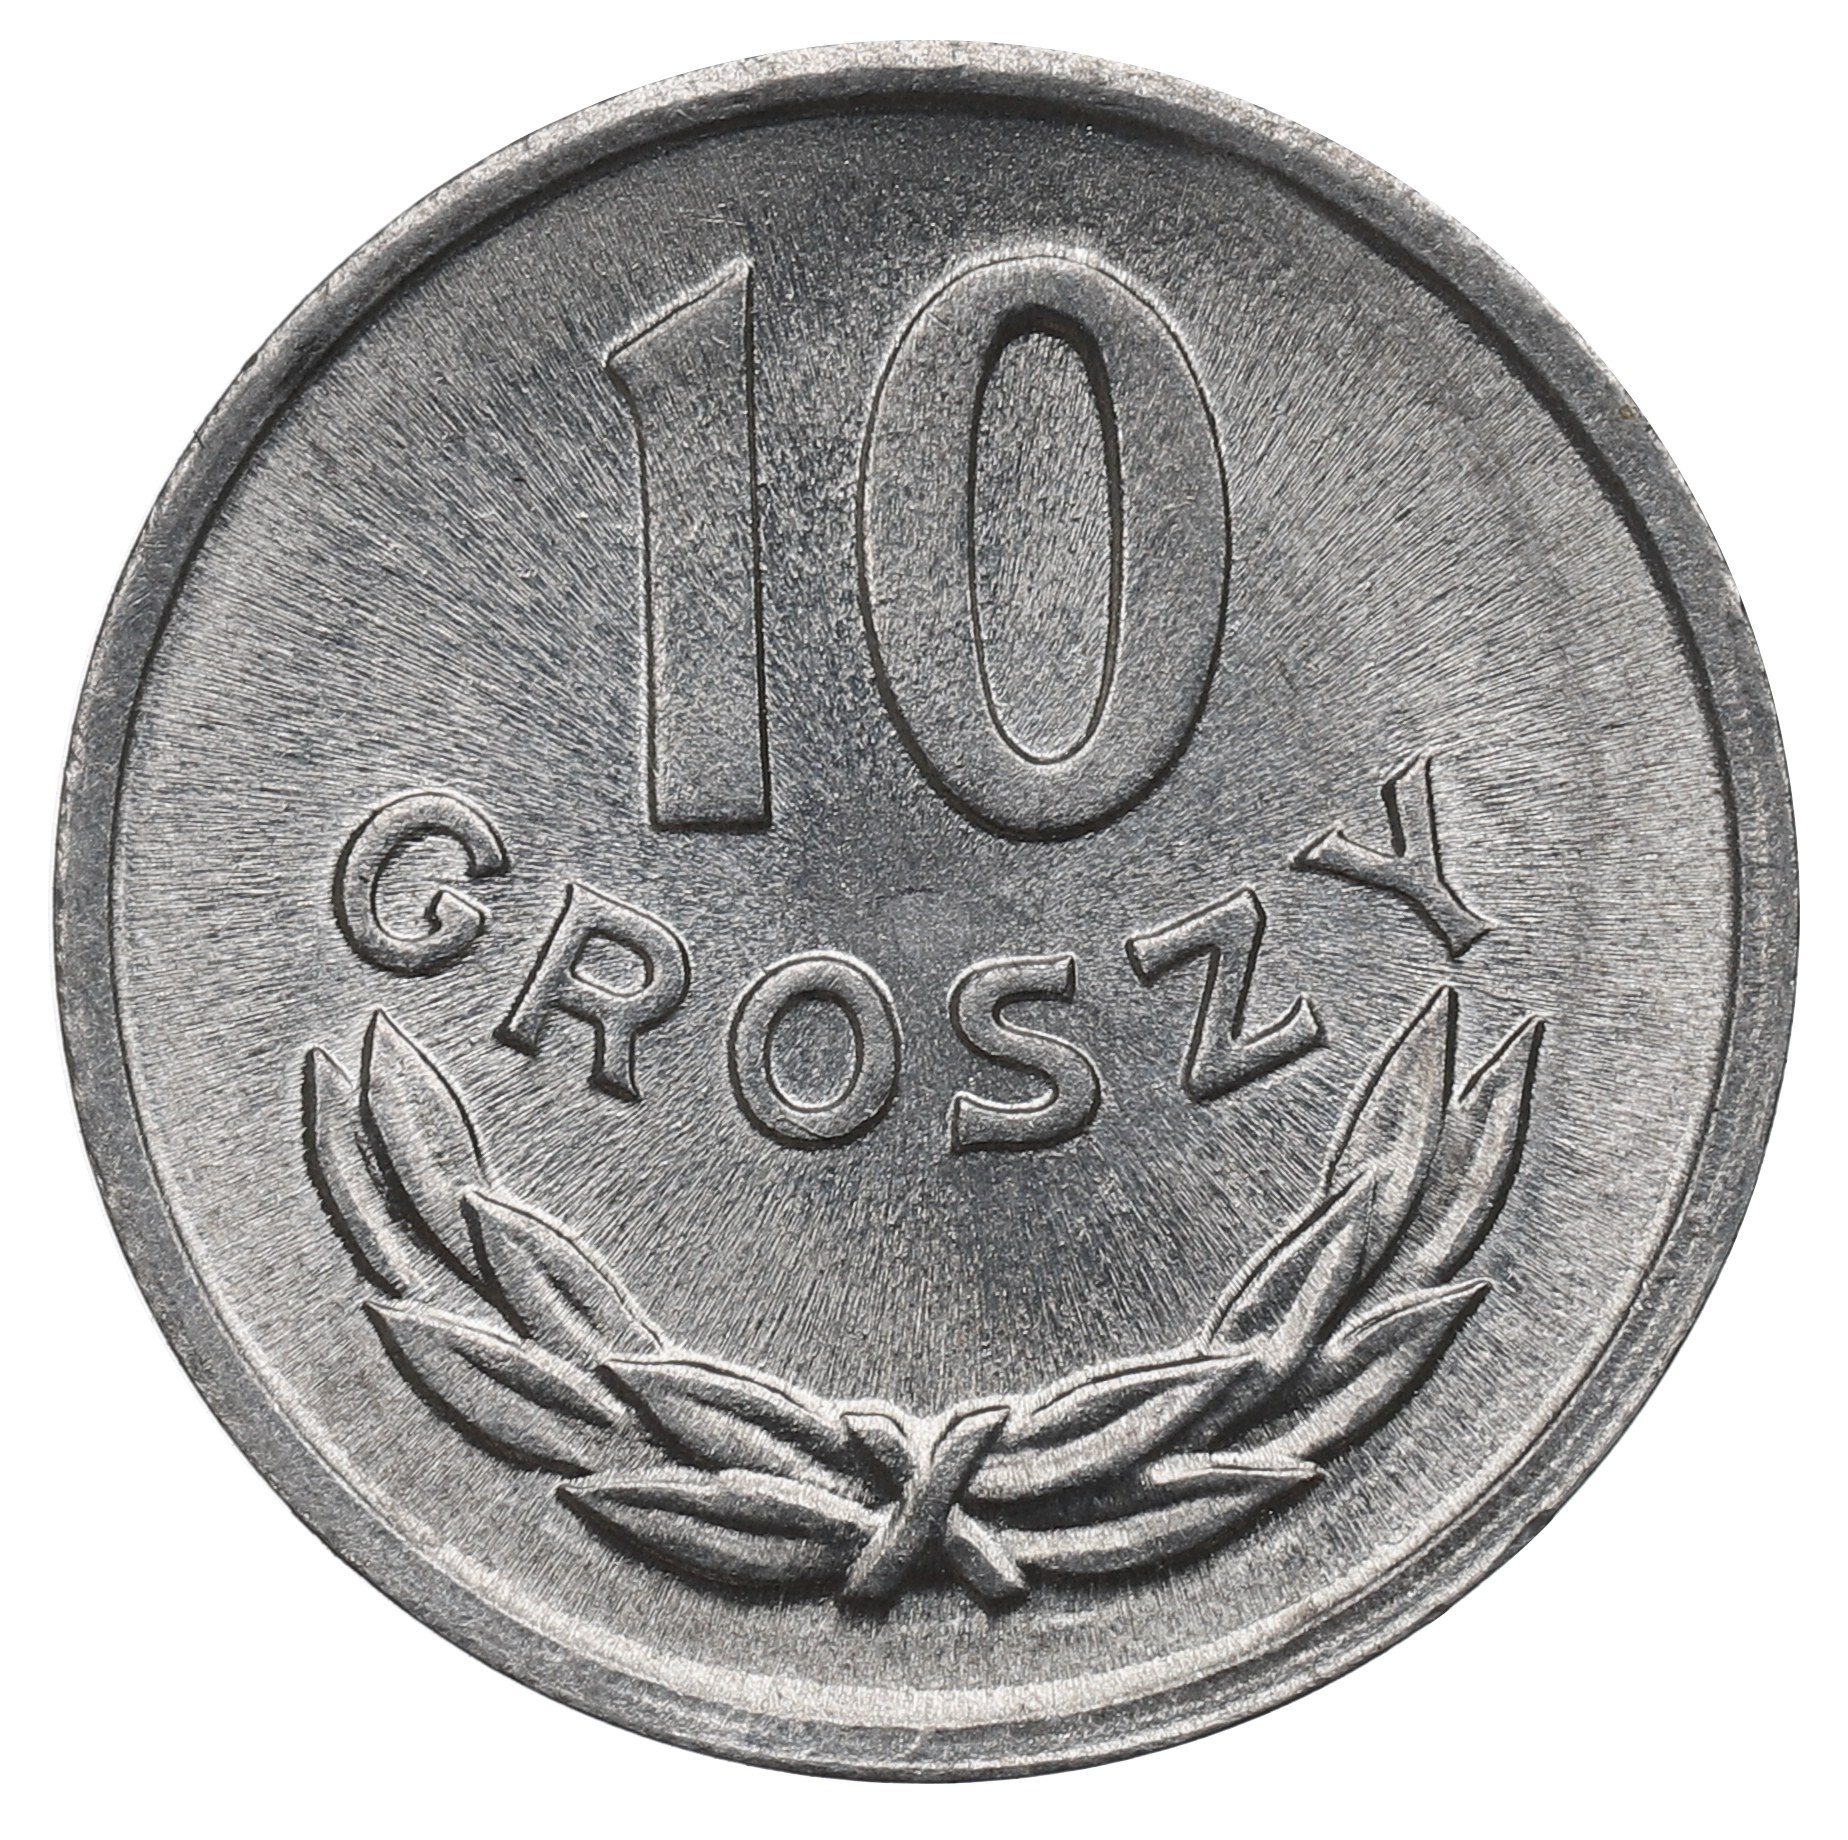 Прл 10. Монета 20 groszy. Польша 10 грошей, 1977. 50 Groszy. Грош монета.